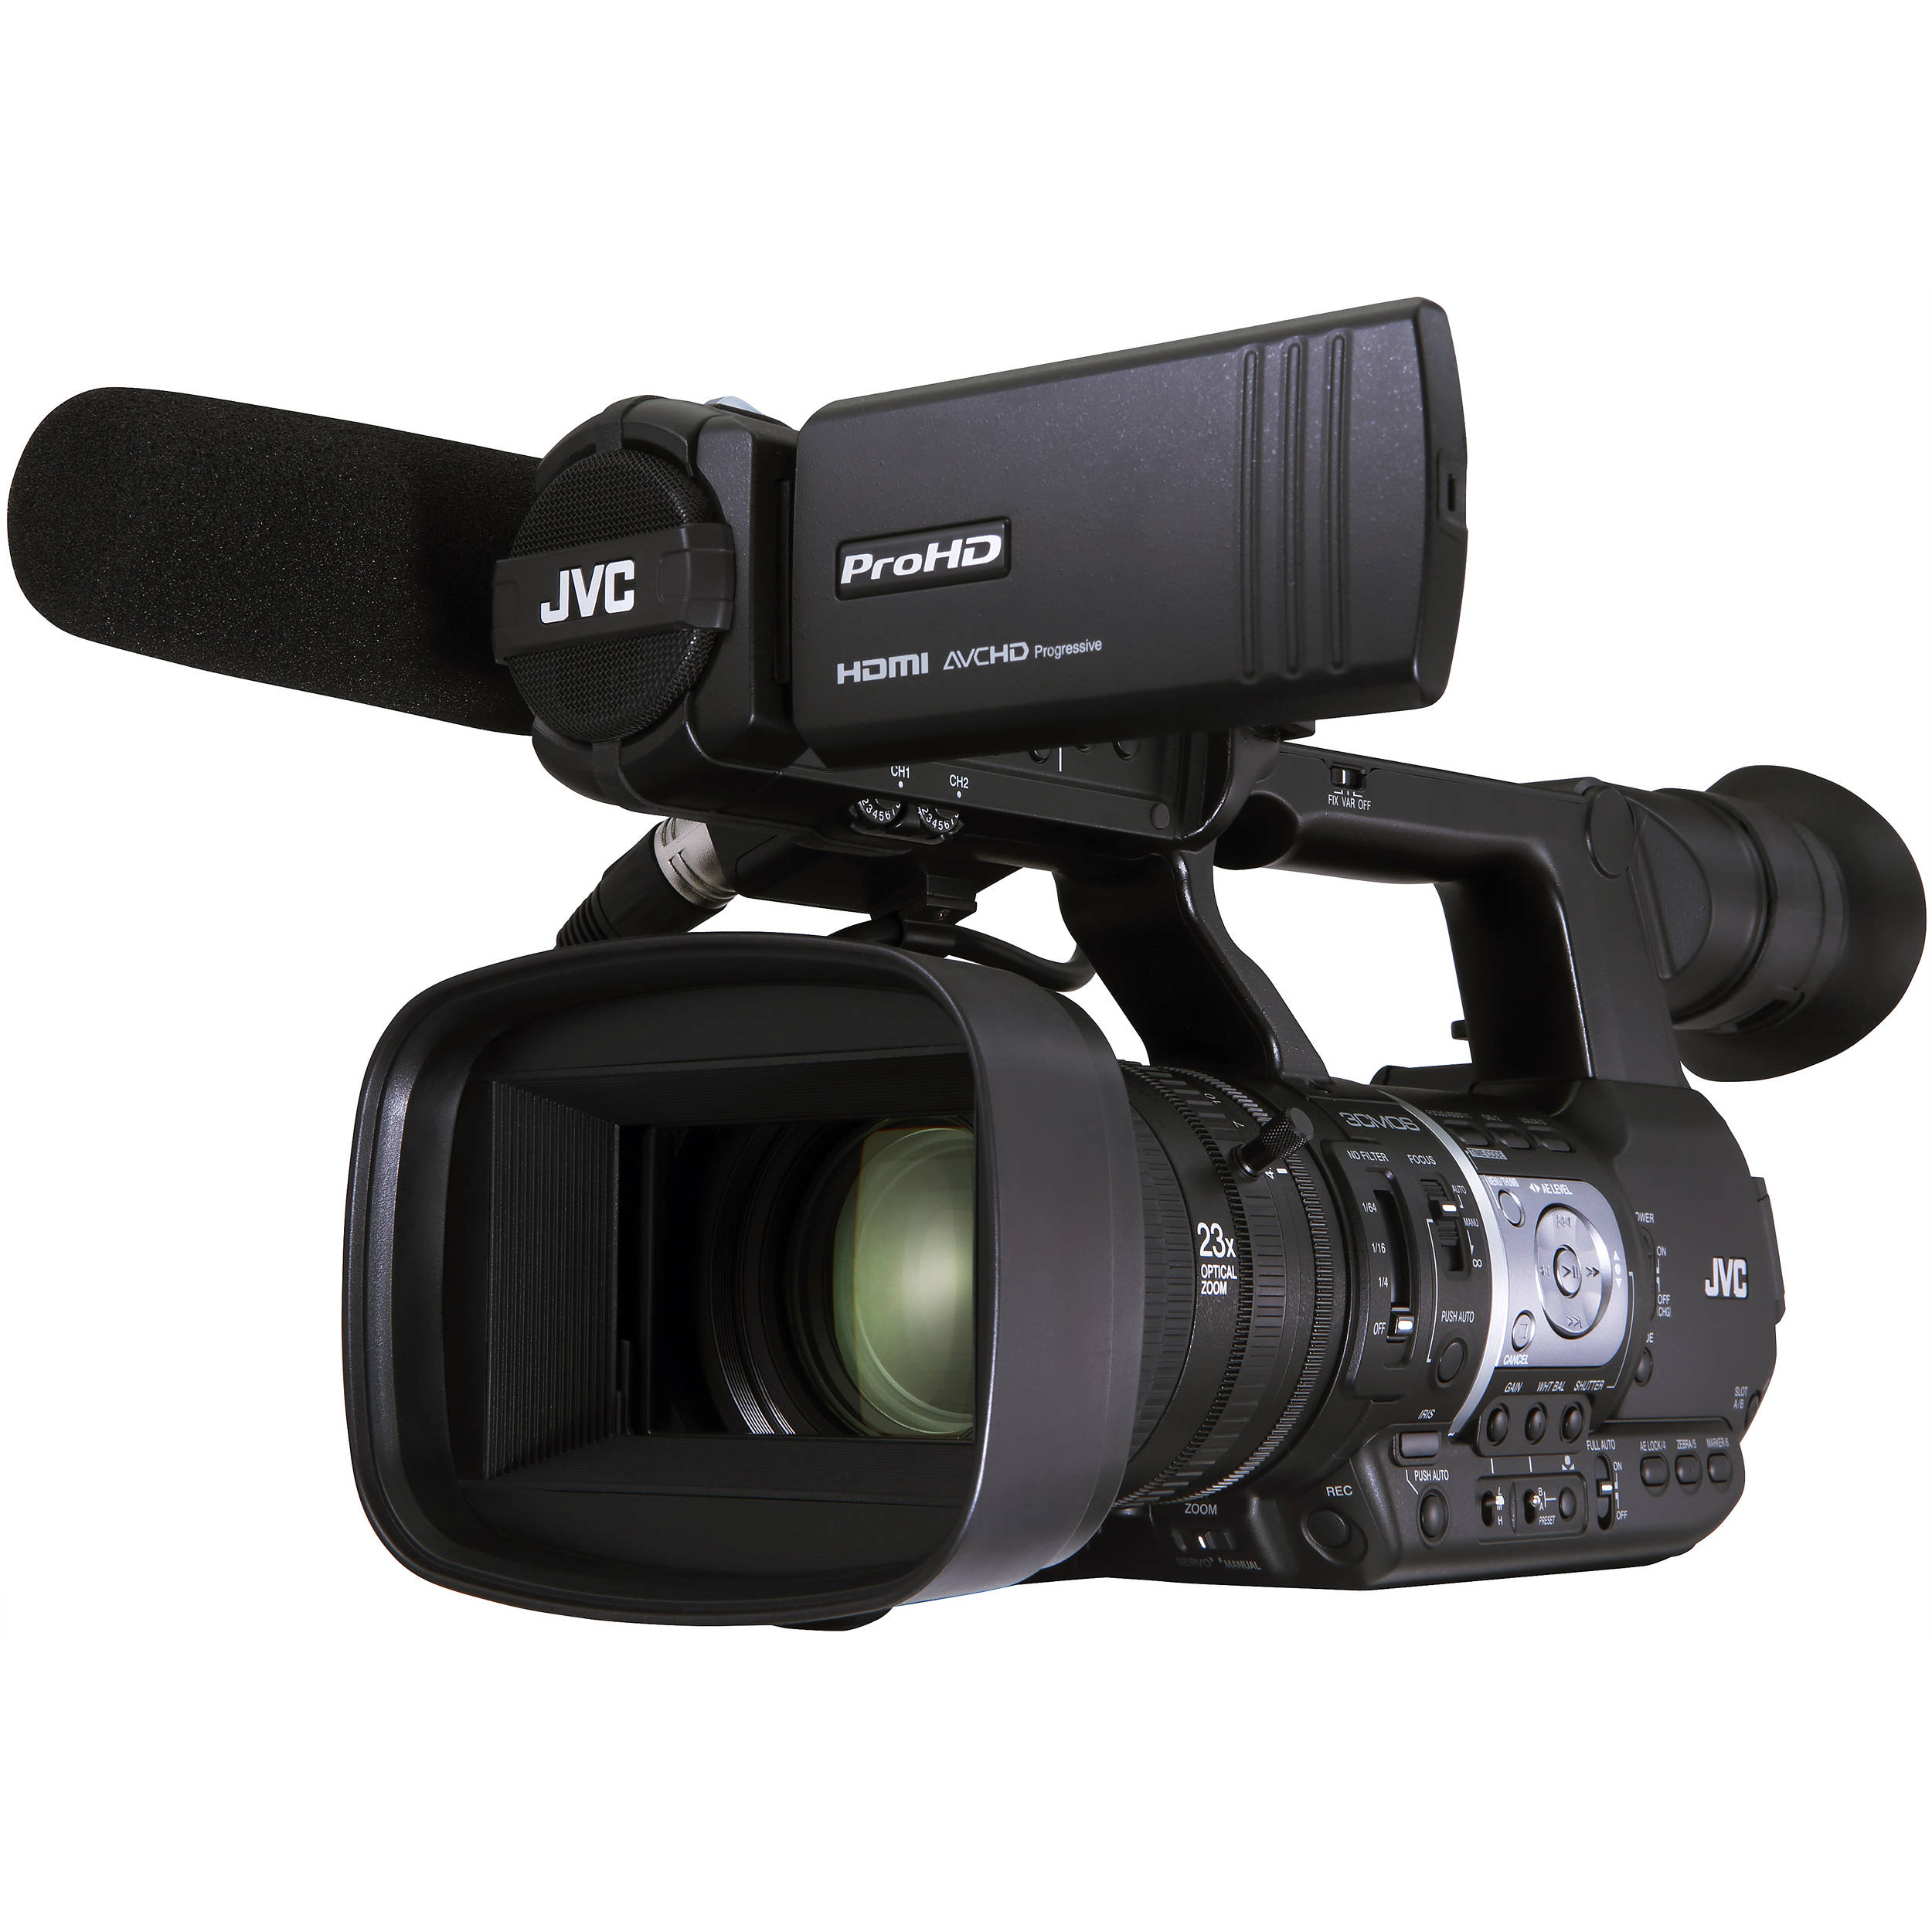 JVC GY-HM620 ProHD Mobile News Camera GY-HM620U B&H Photo Video